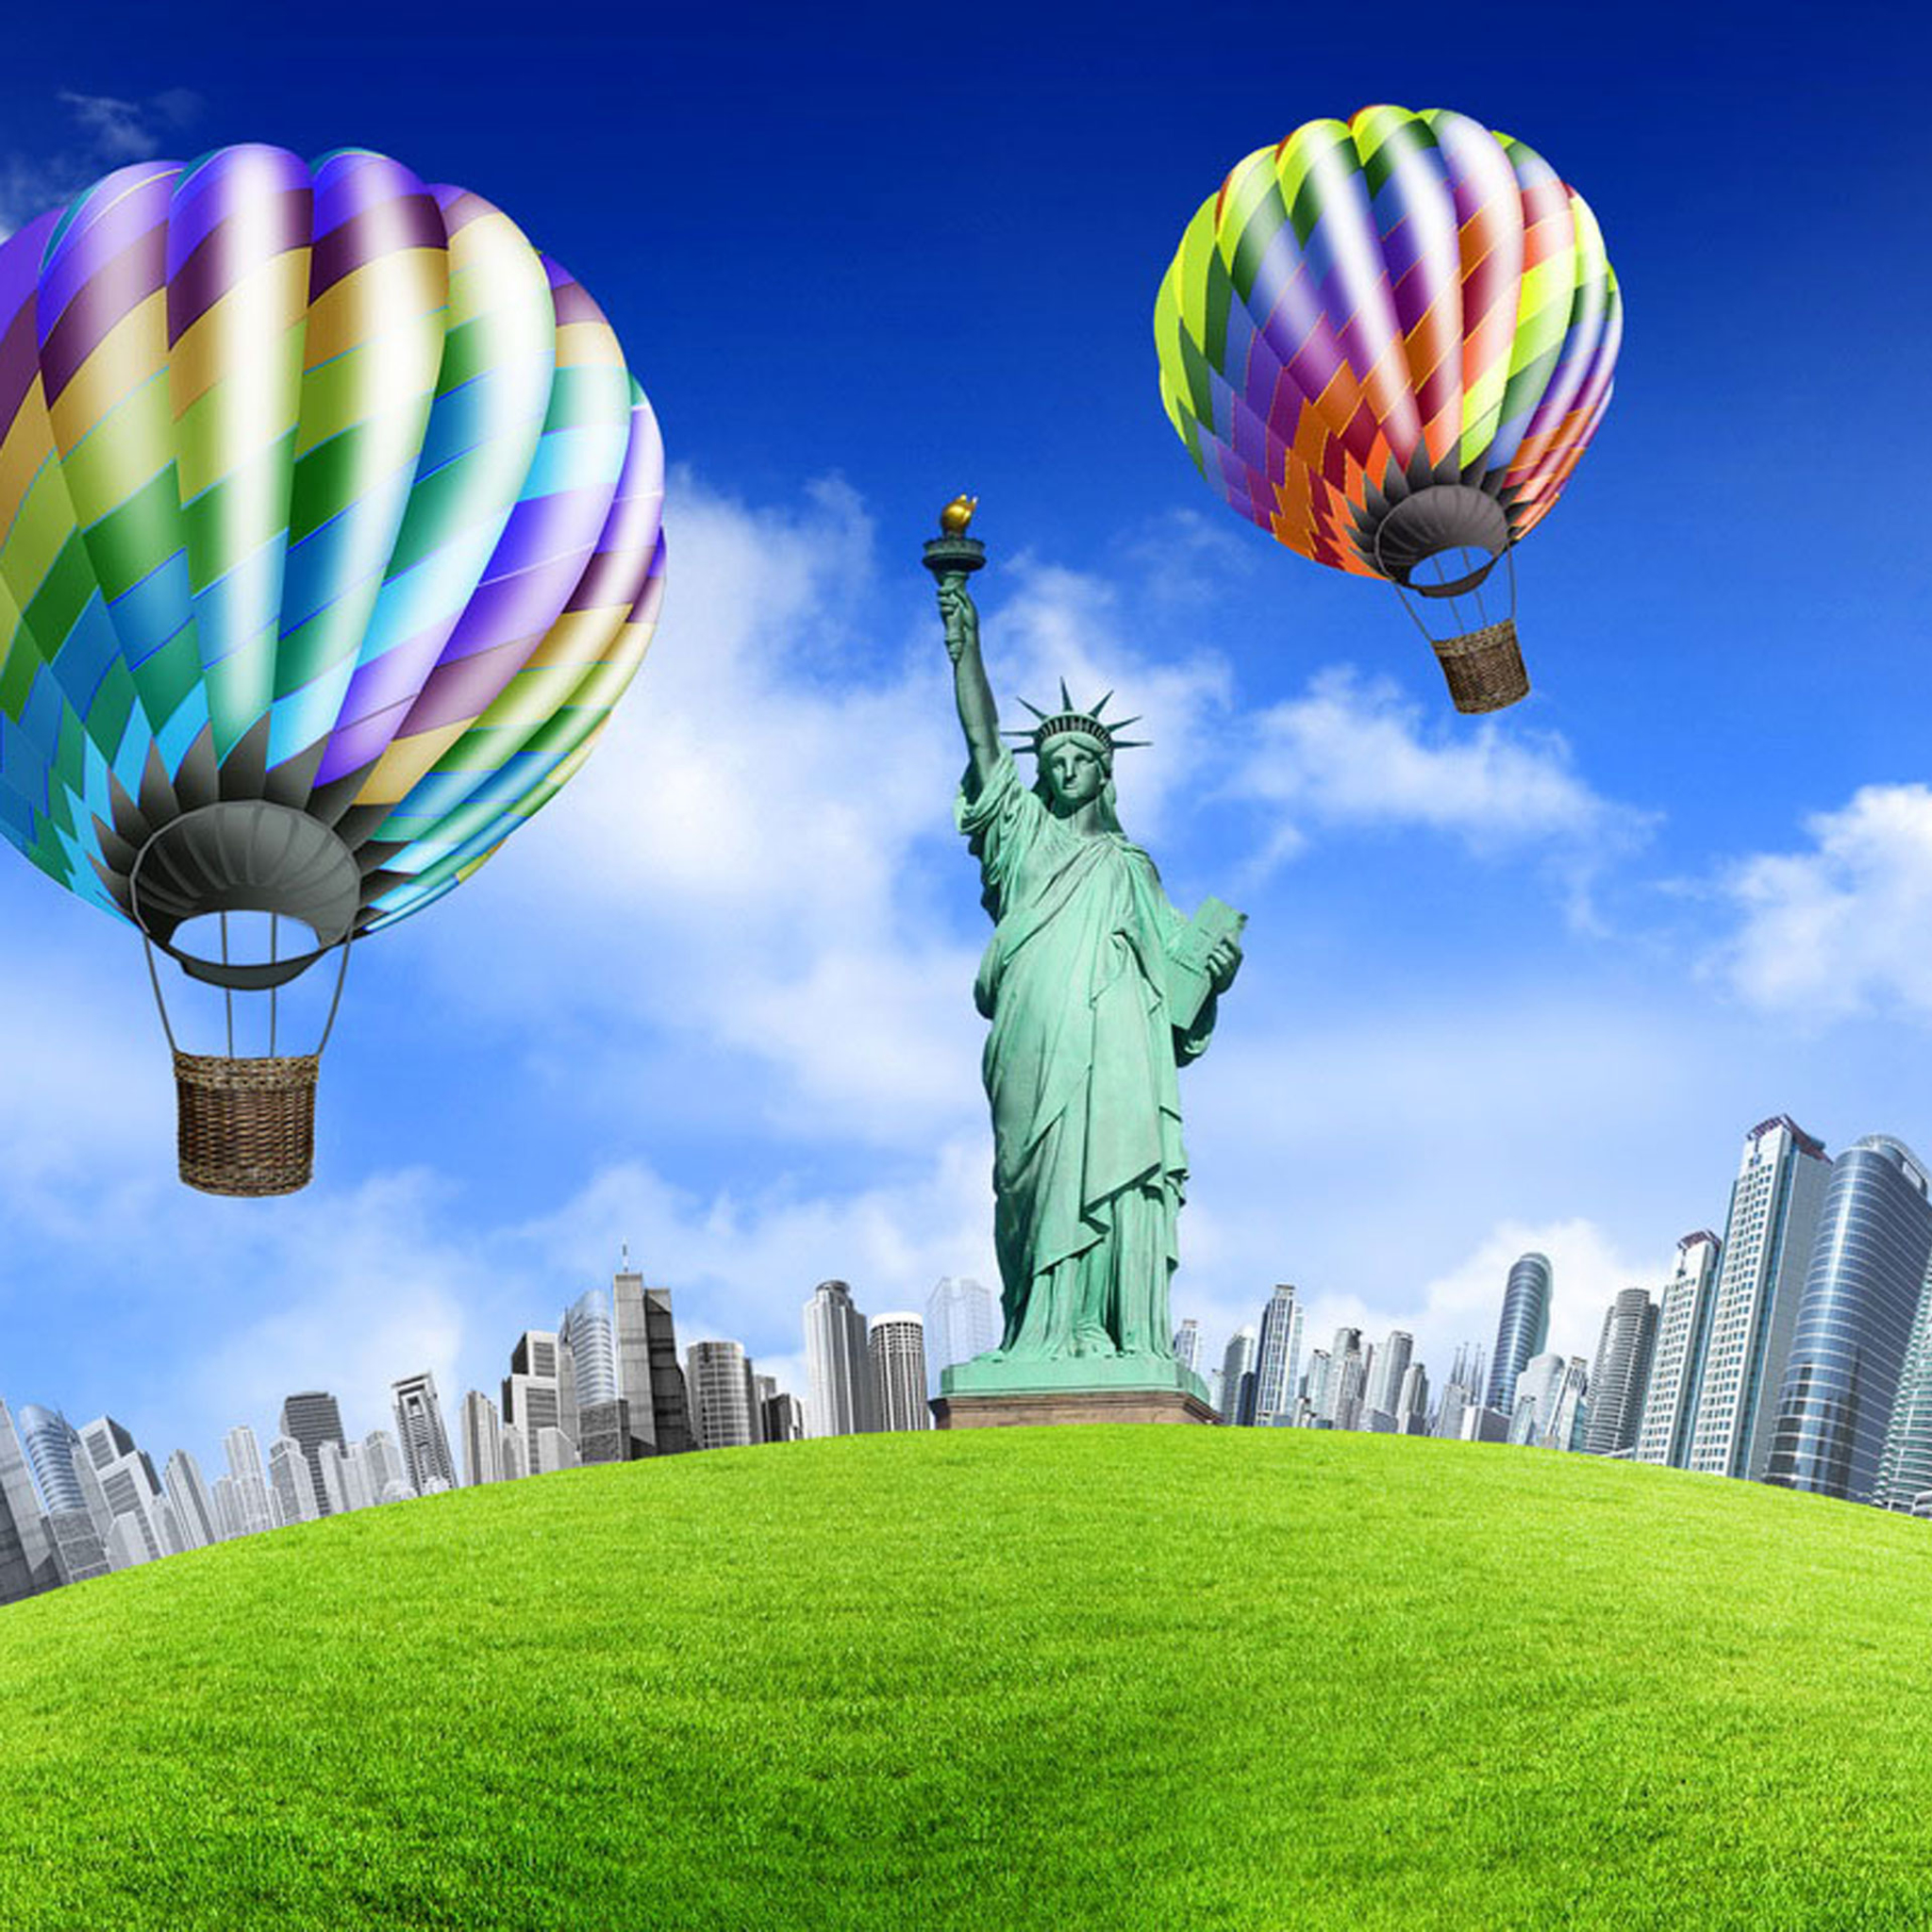 ipad air wallpaper 2048x2048,hot air ballooning,hot air balloon,landmark,sky,mode of transport